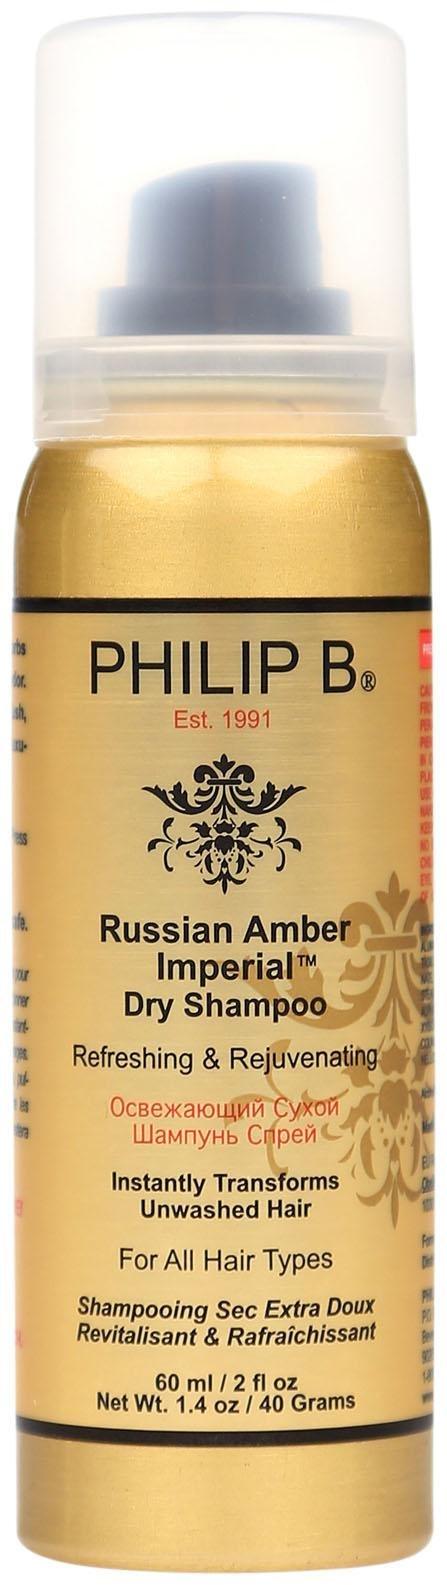 Philip B. Russian Amber Dry Shampoo